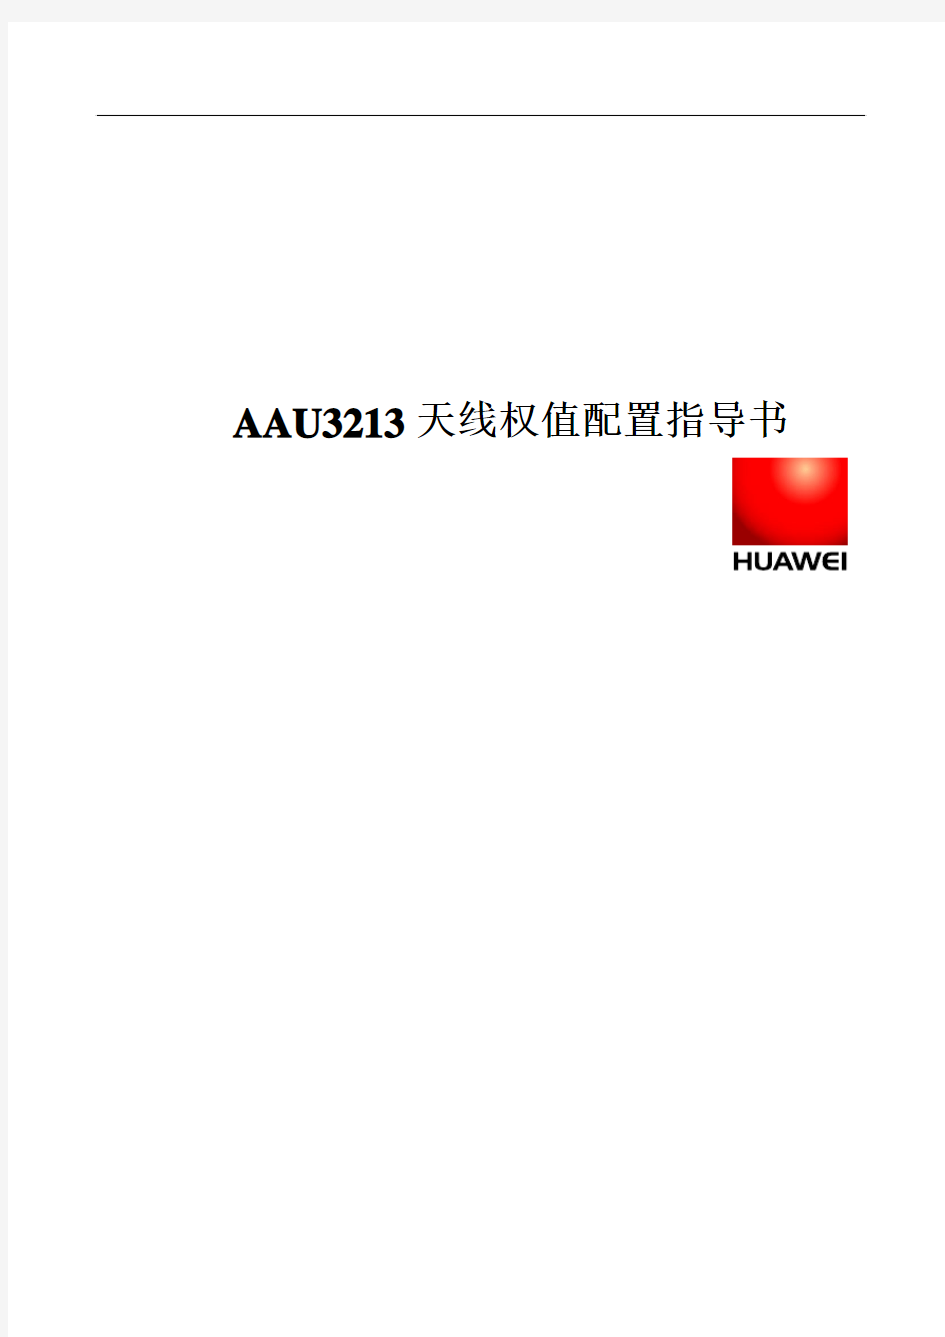 AAU3213智能天线配置指导书V2- 修改by Quanlang